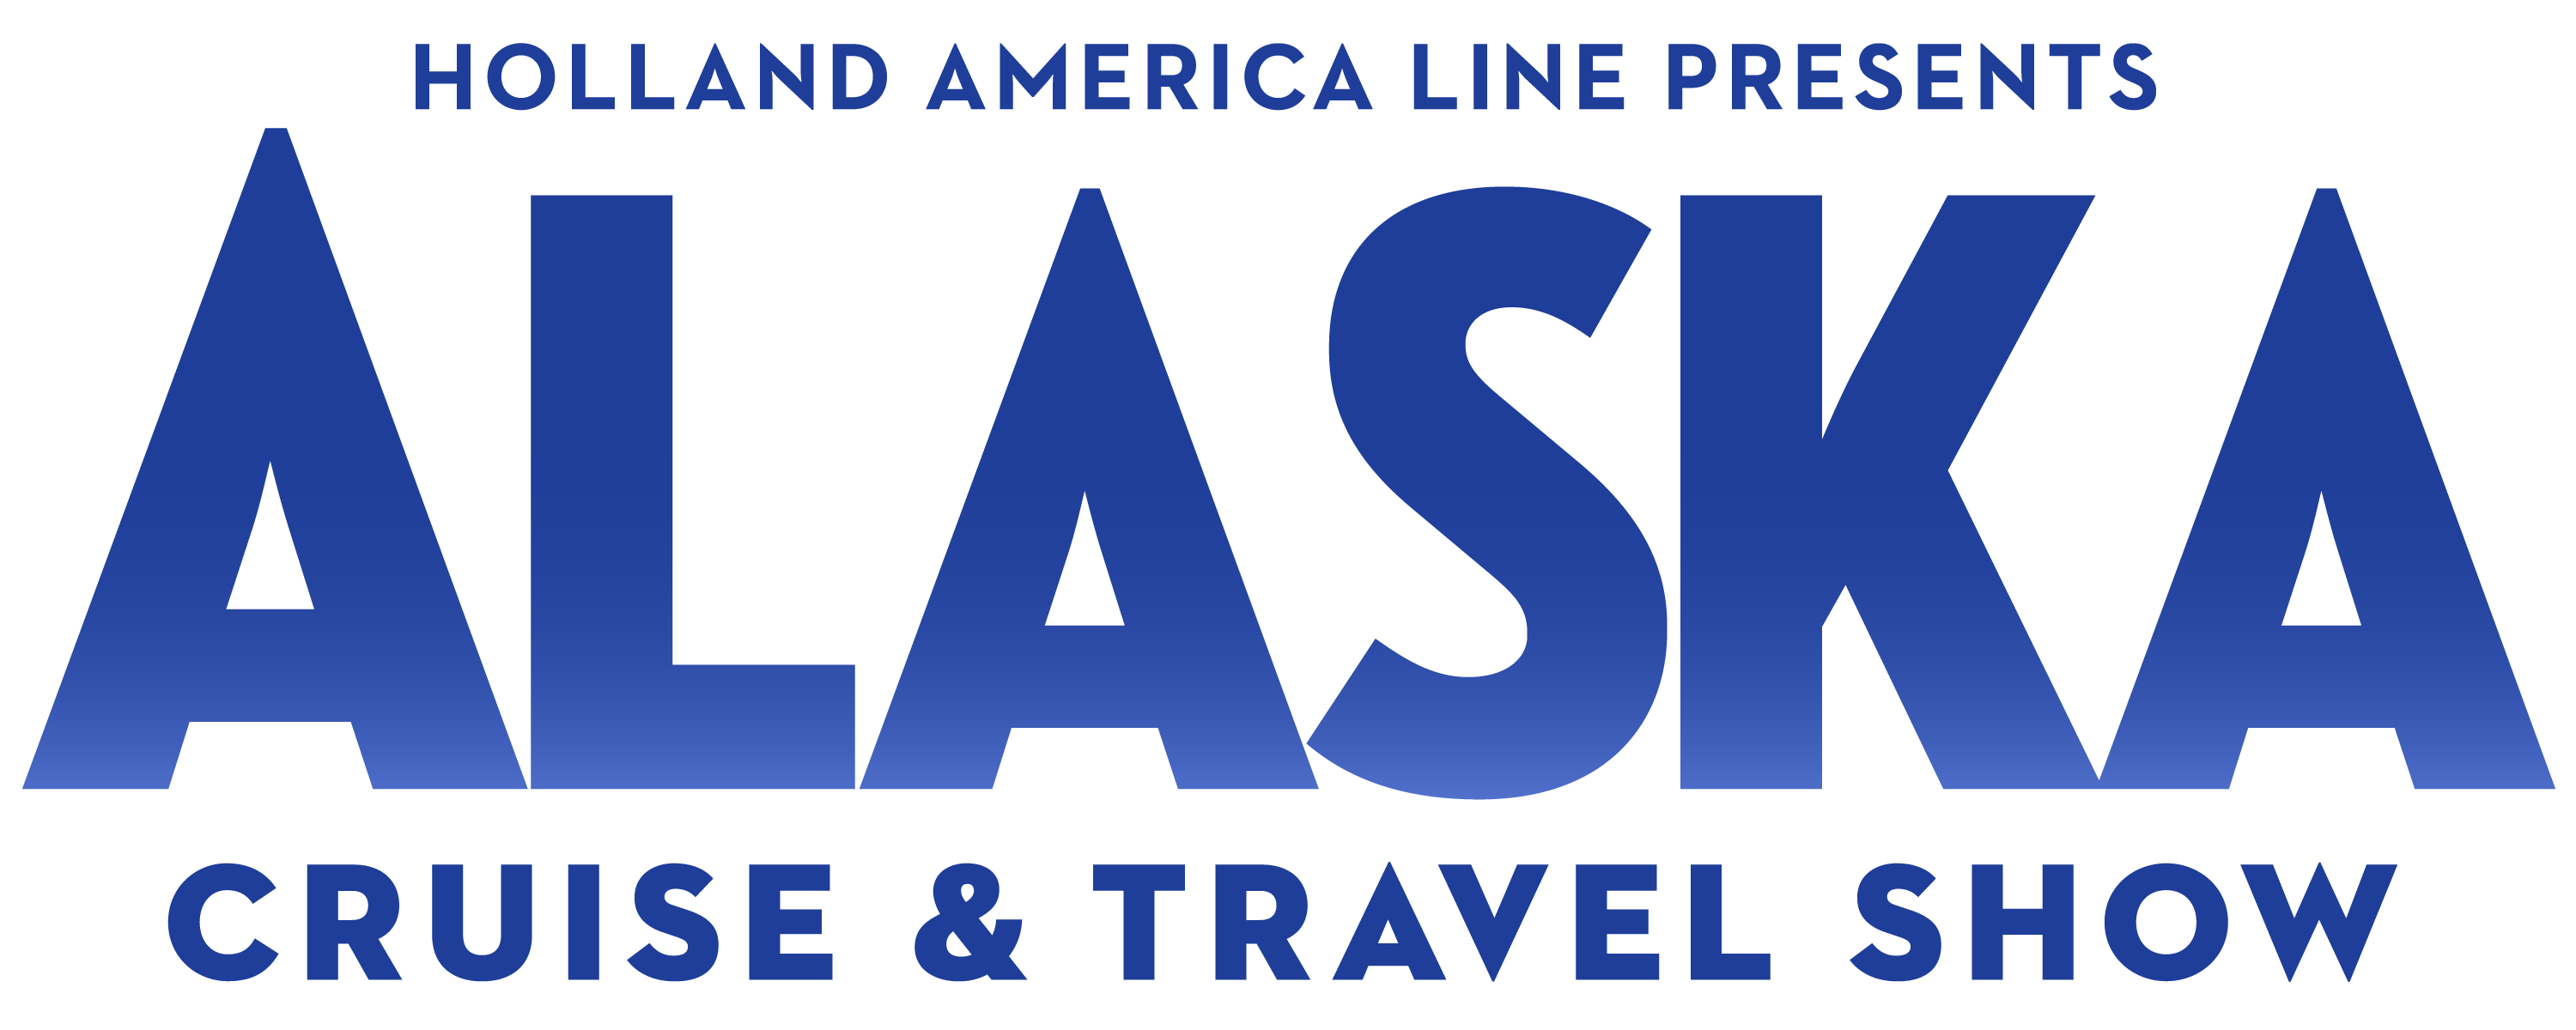 Holland America Line Presents Alaska Cruise & Travel Show